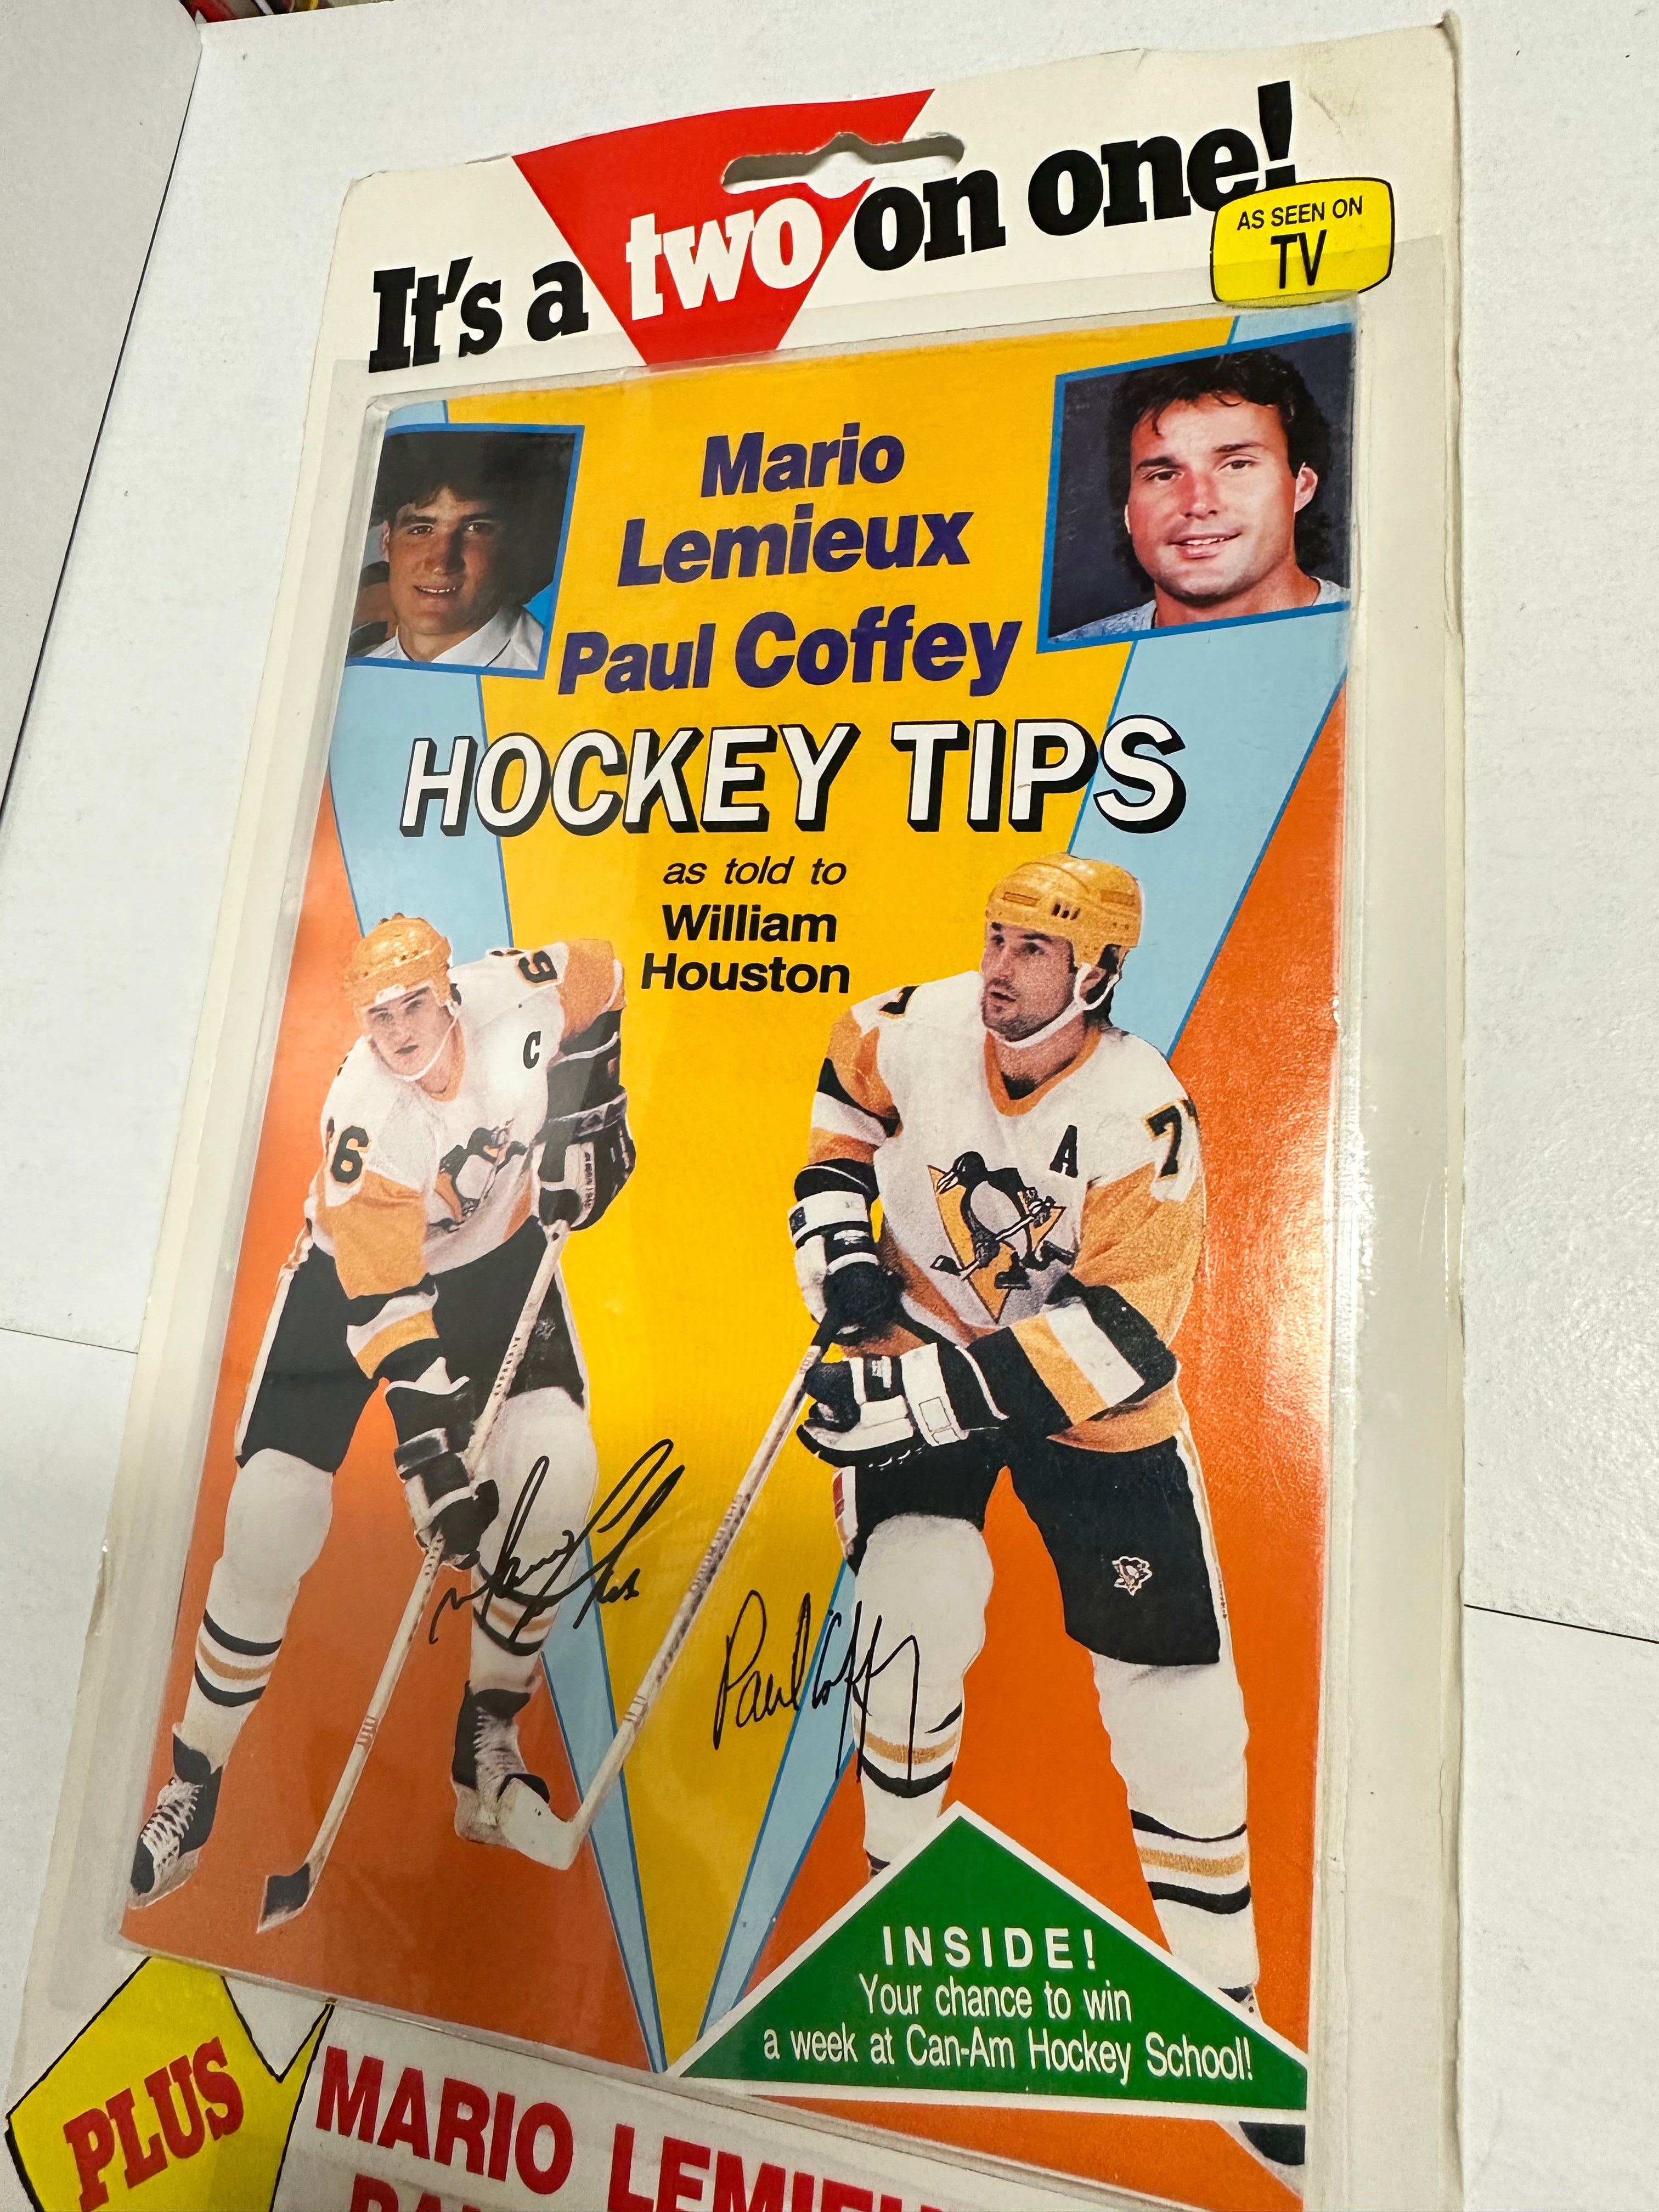 Mario Lemieux/ Paul Coffey rare skate sharpener in sealed pack 1990s